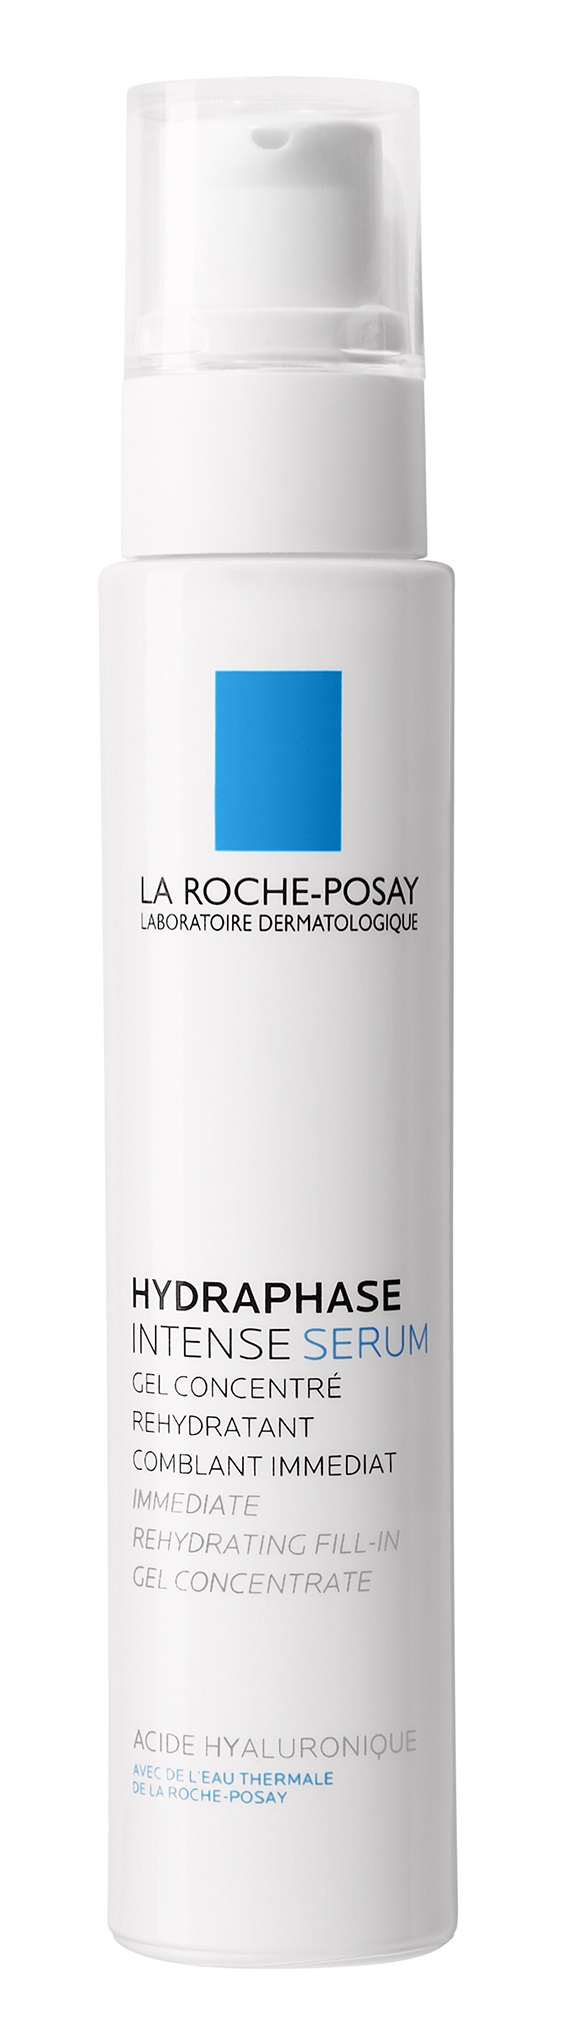 LA ROCHE-POSAY Hydraphase Intense szérum 30 ml